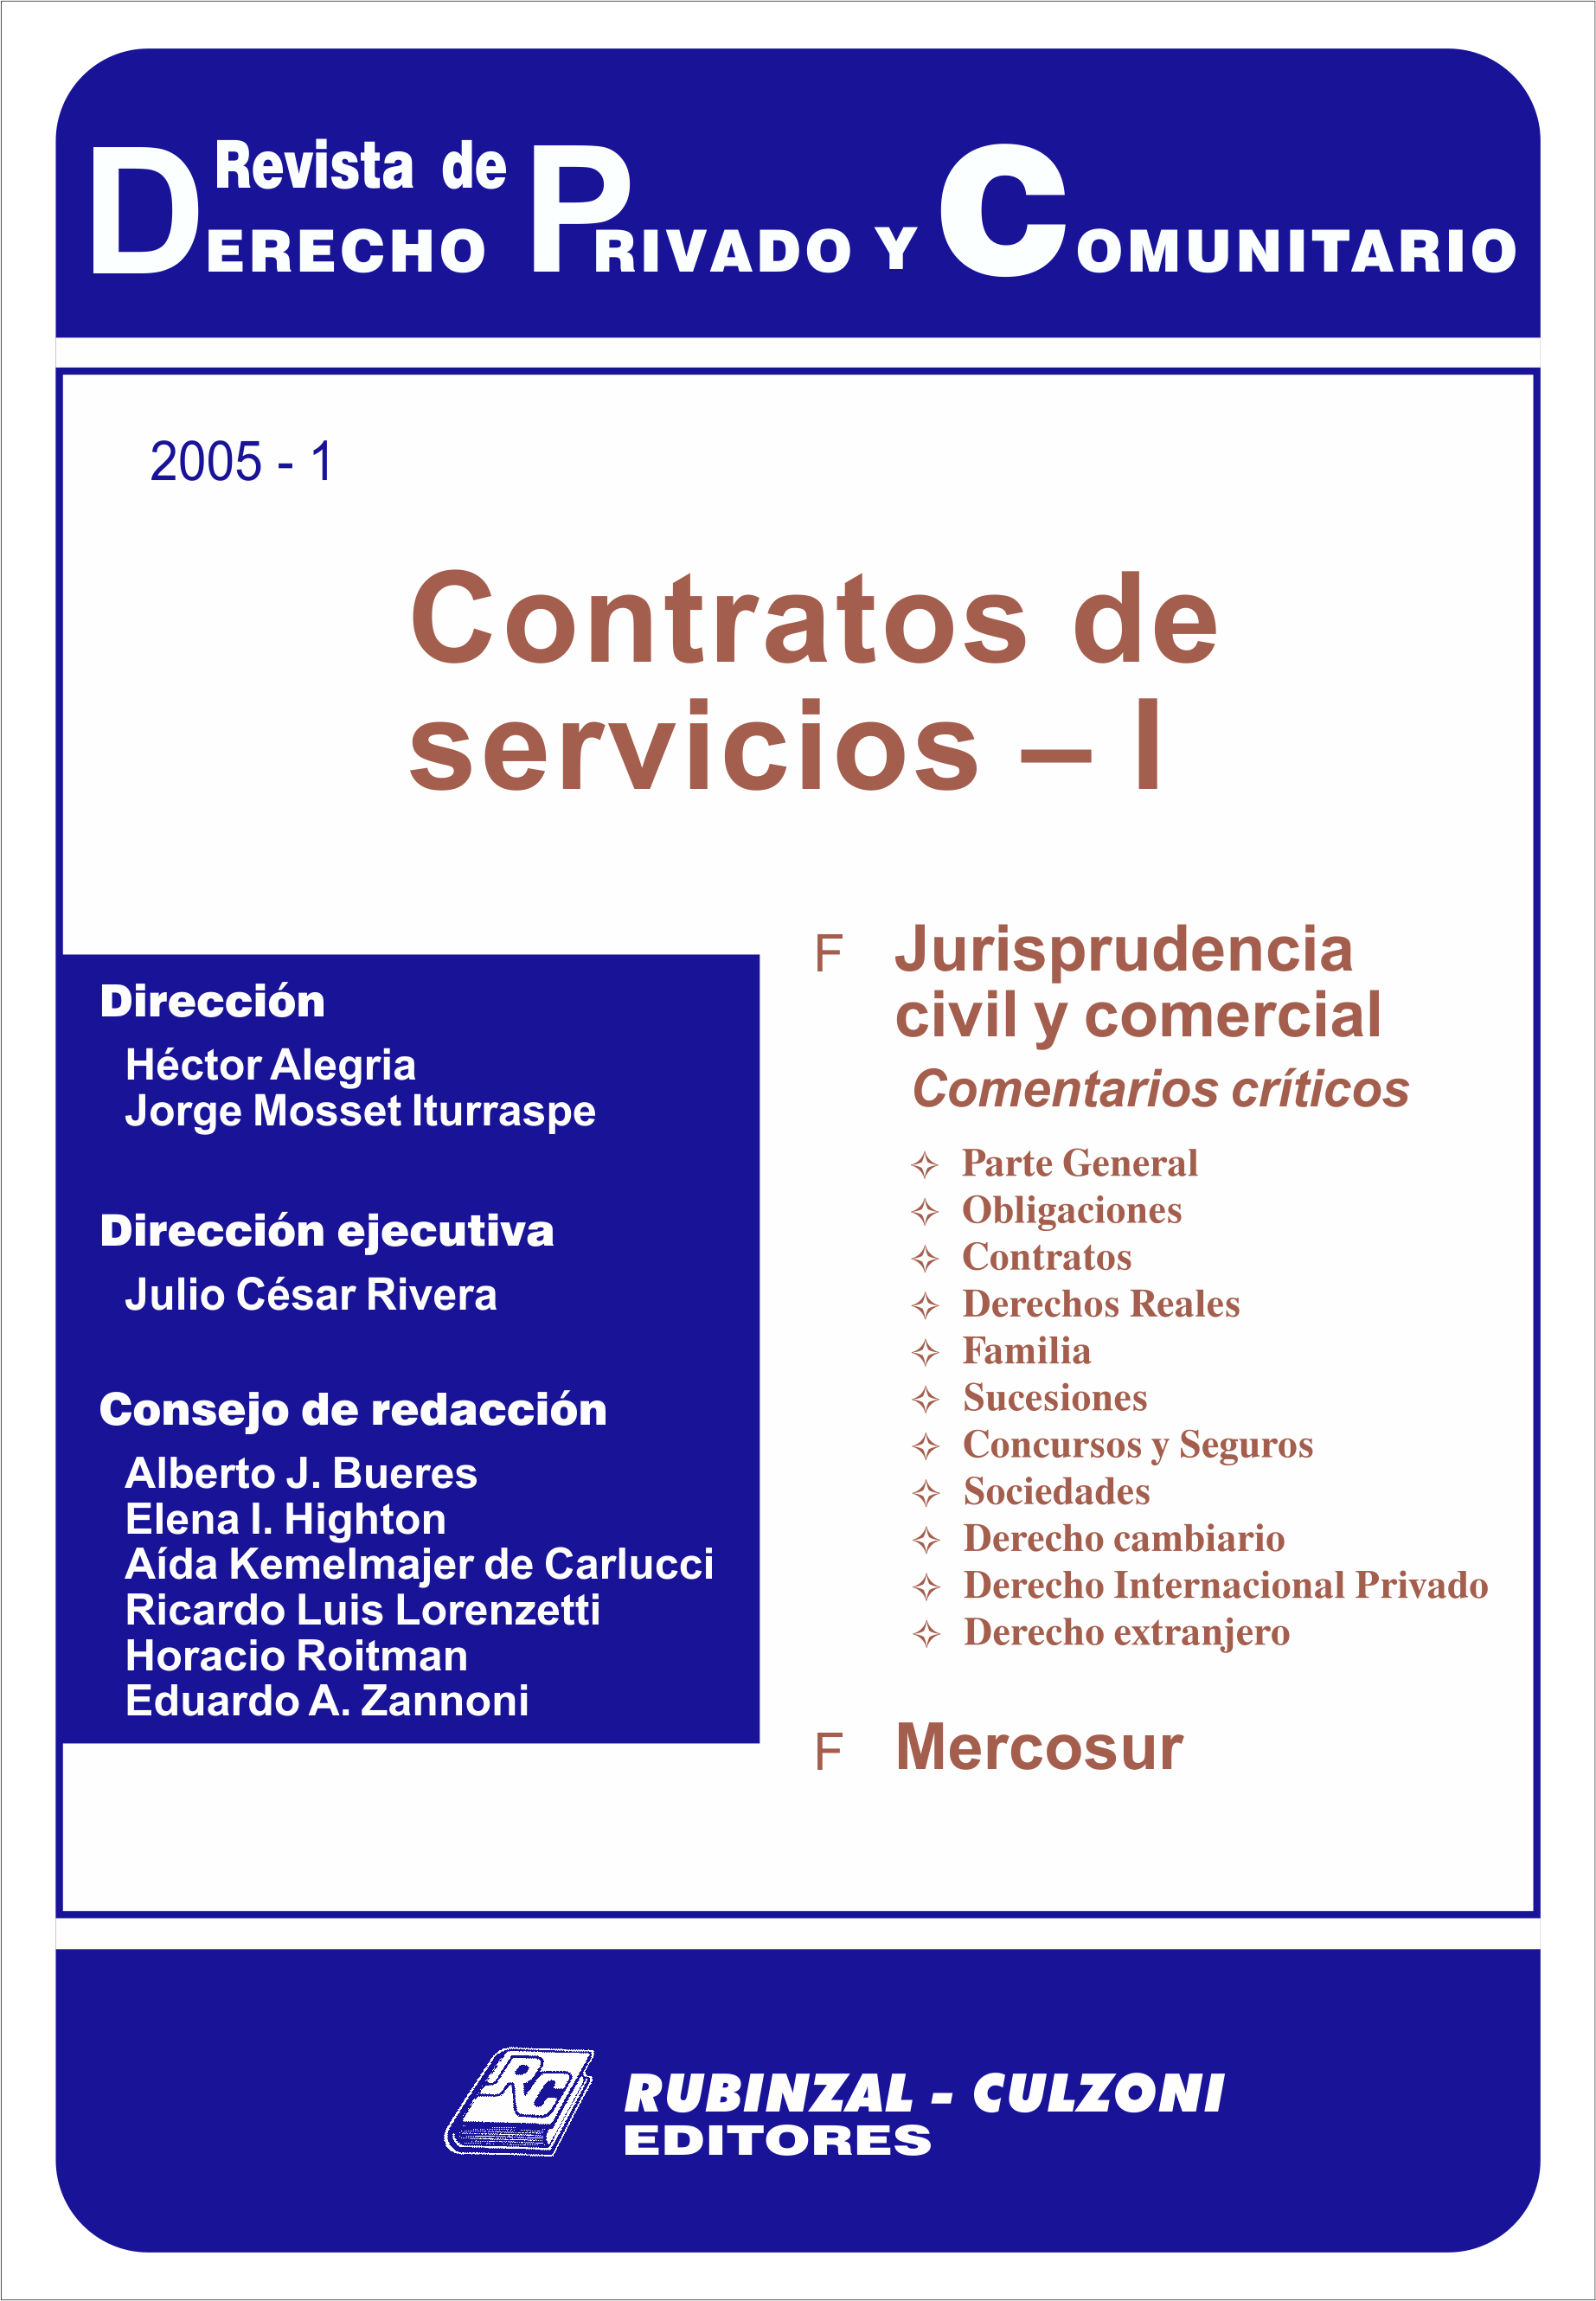 Contratos de servicios - I. [2005-1]